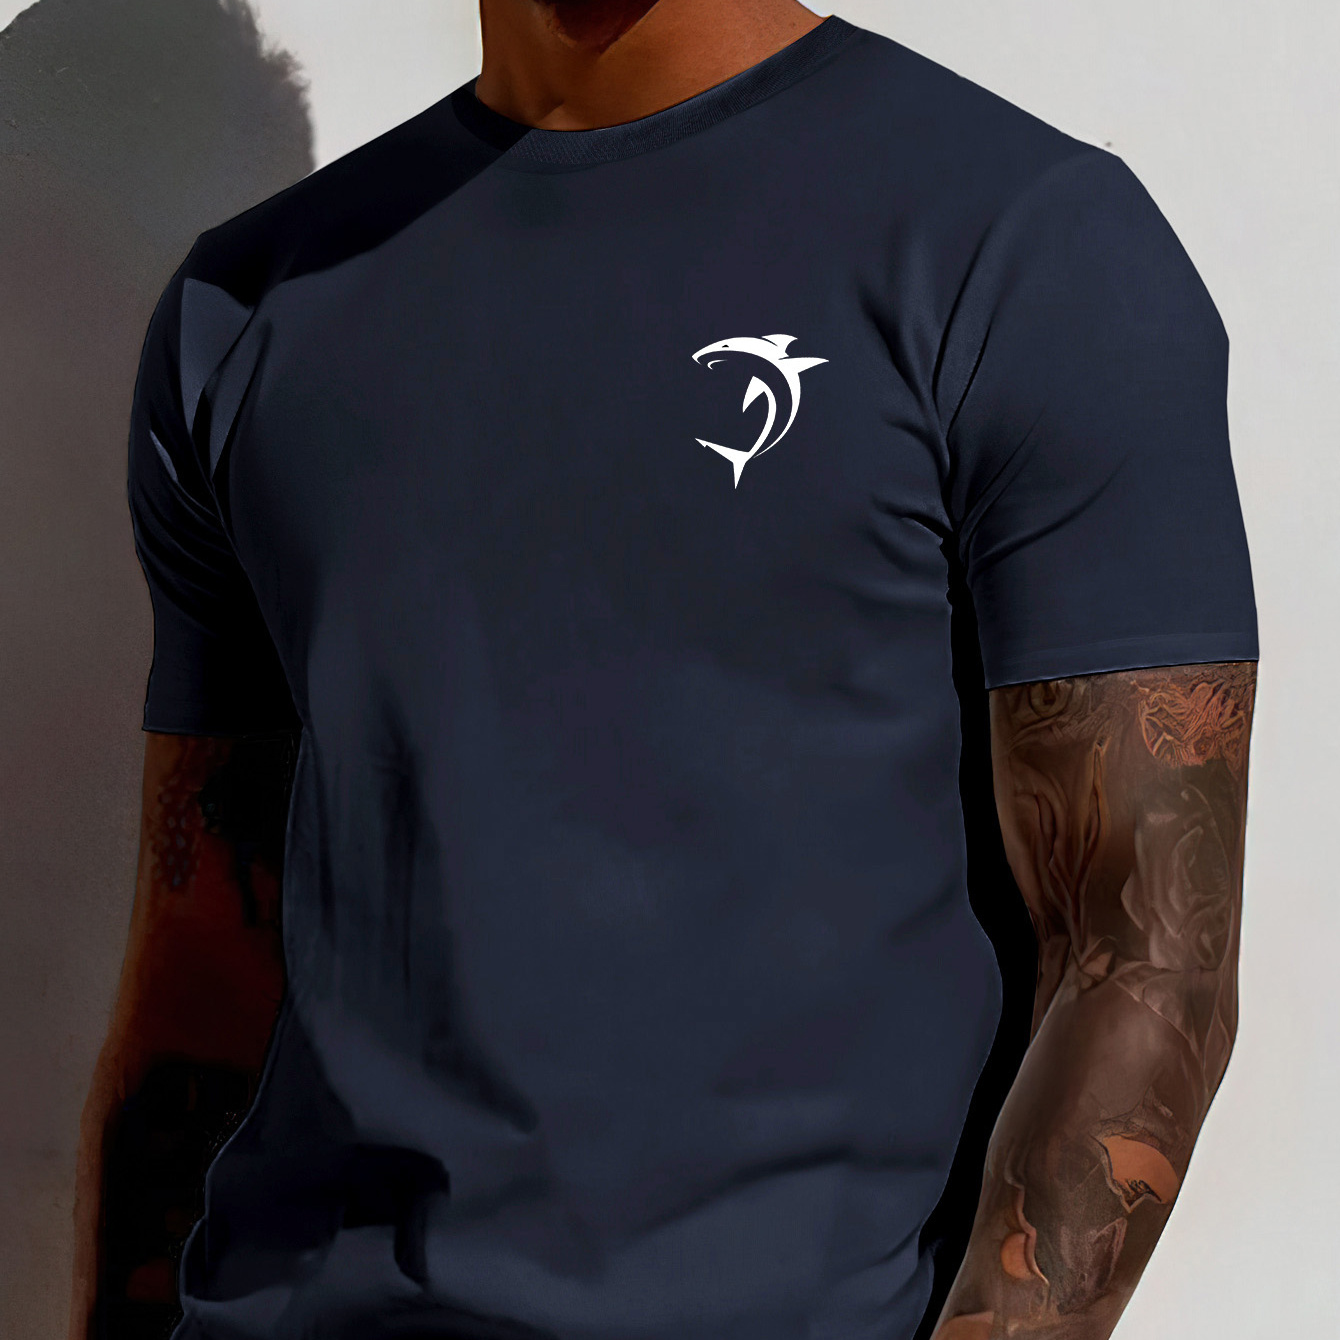 

Shark Print Tee Shirt, Tees For Men, Casual Short Sleeve T-shirt For Summer